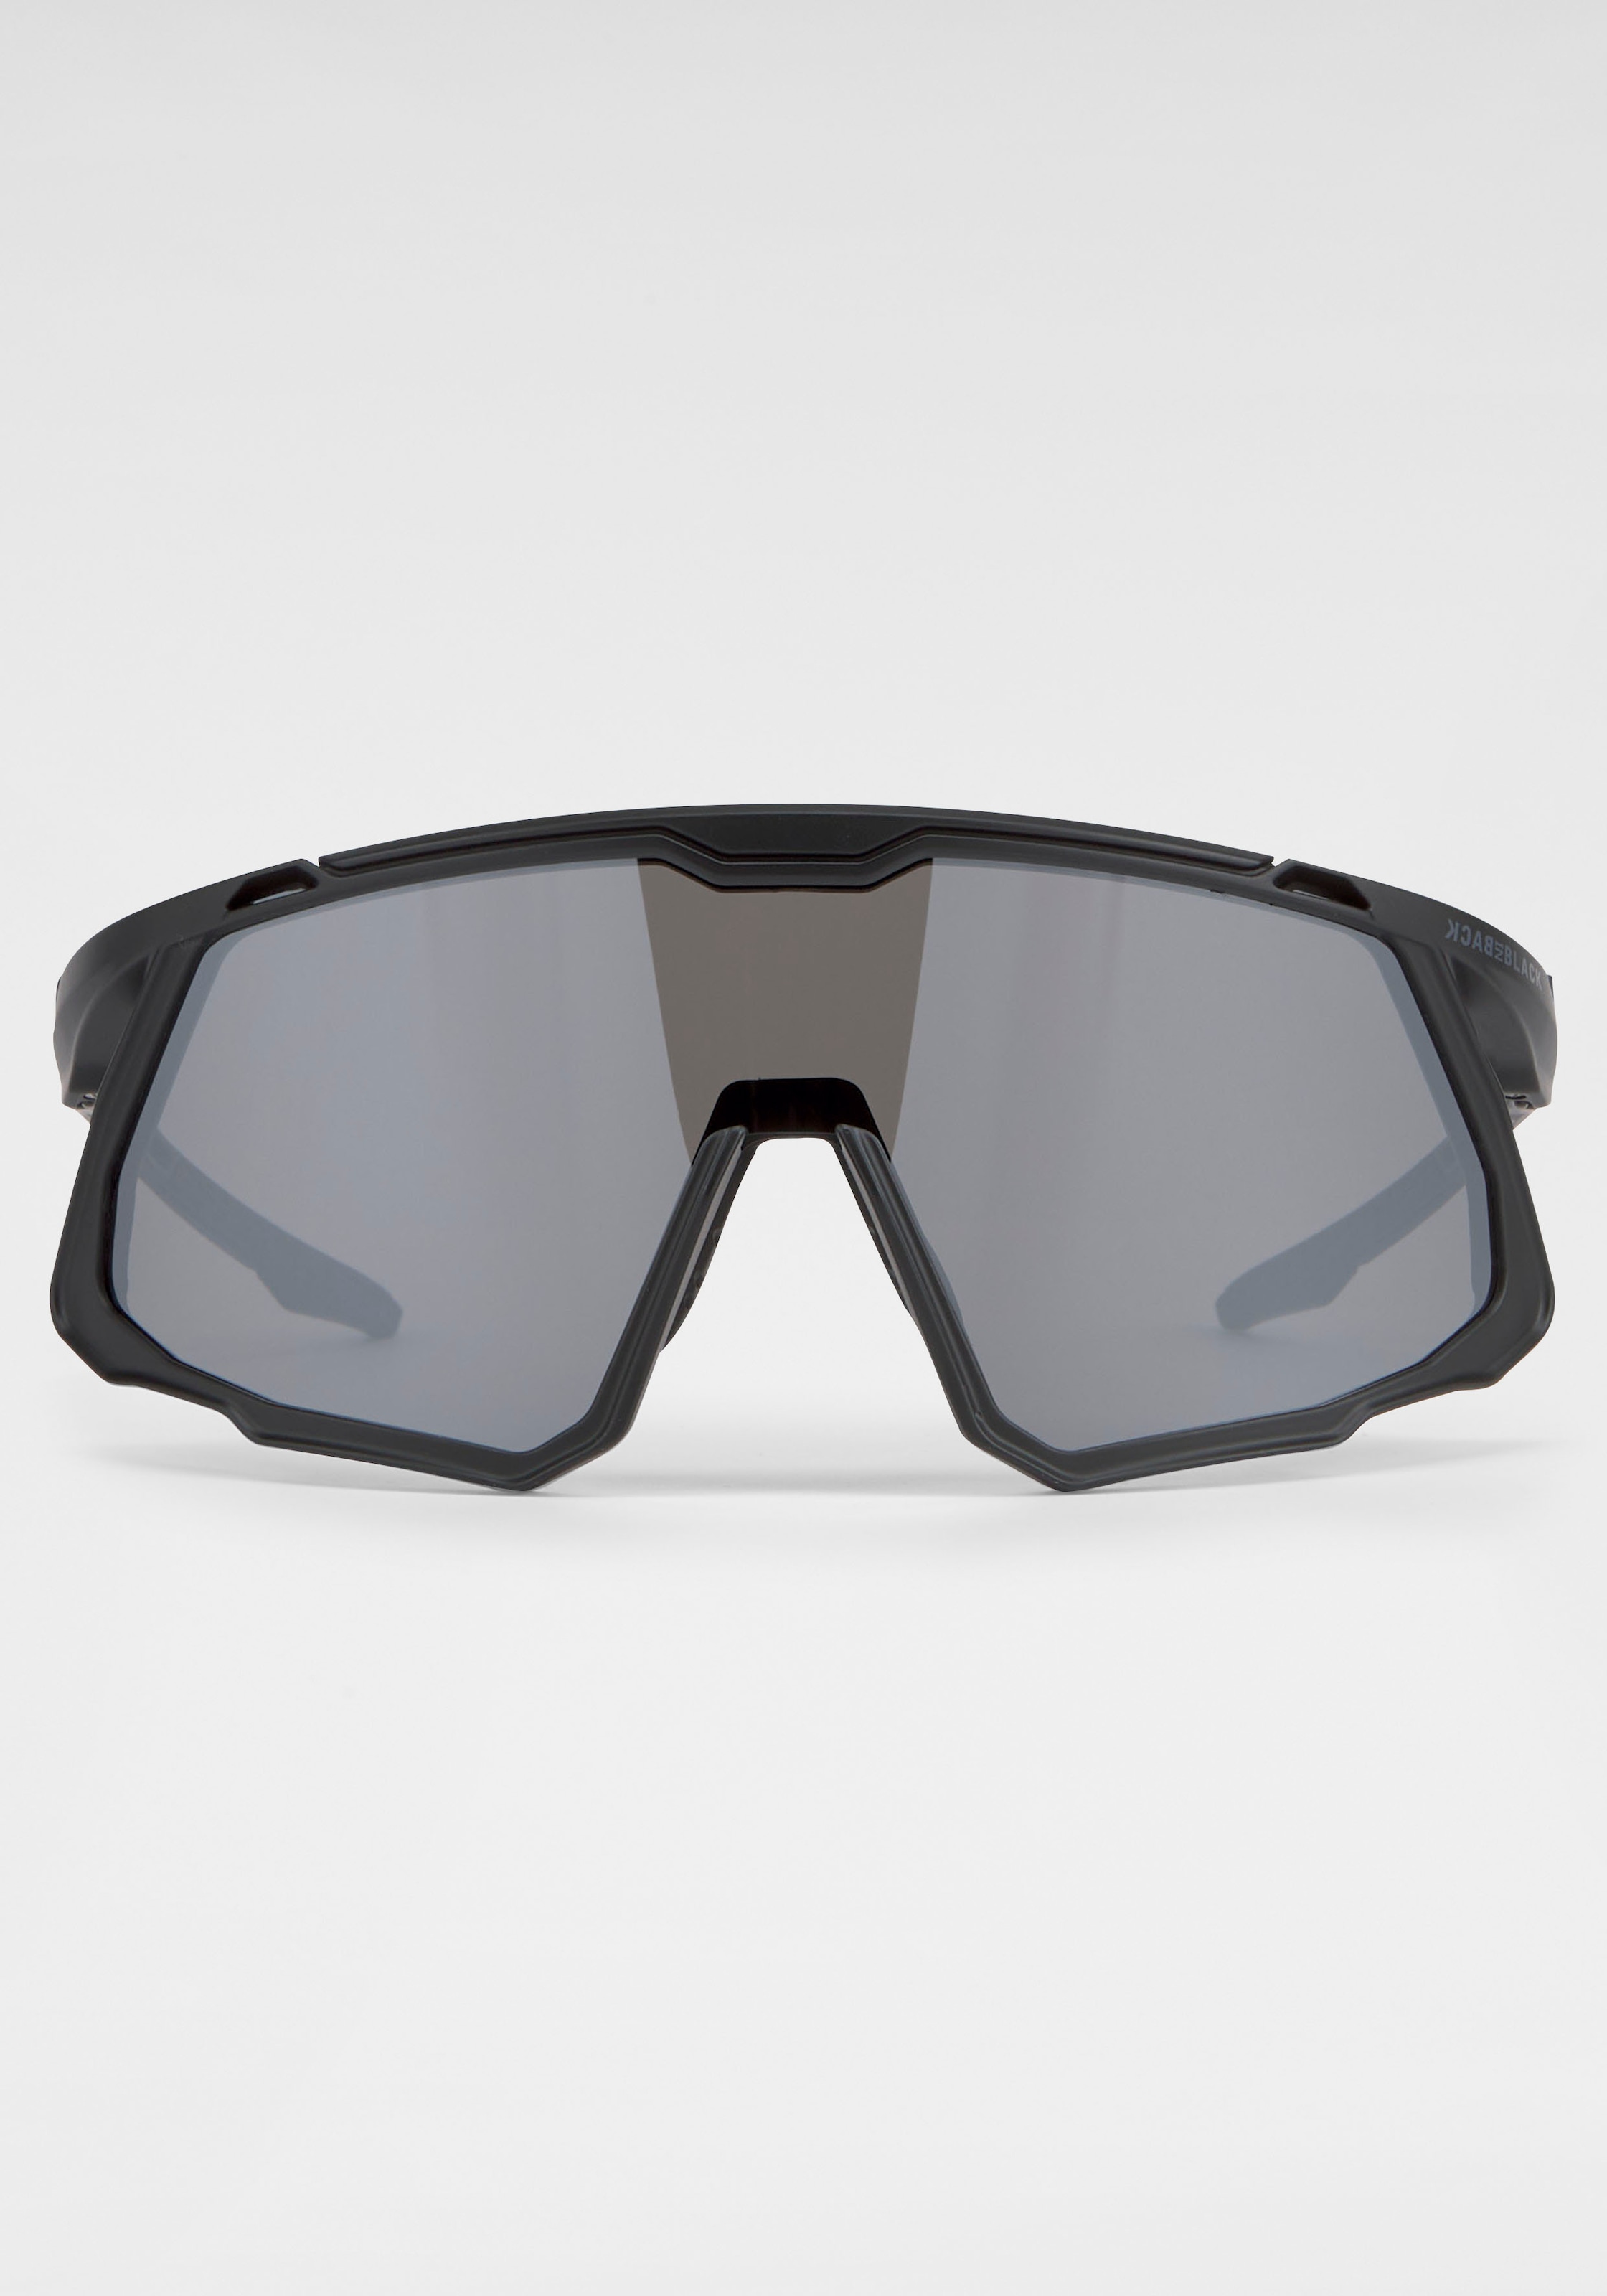 BACK IN BLACK Eyewear Sonnenbrille, gebogene Form